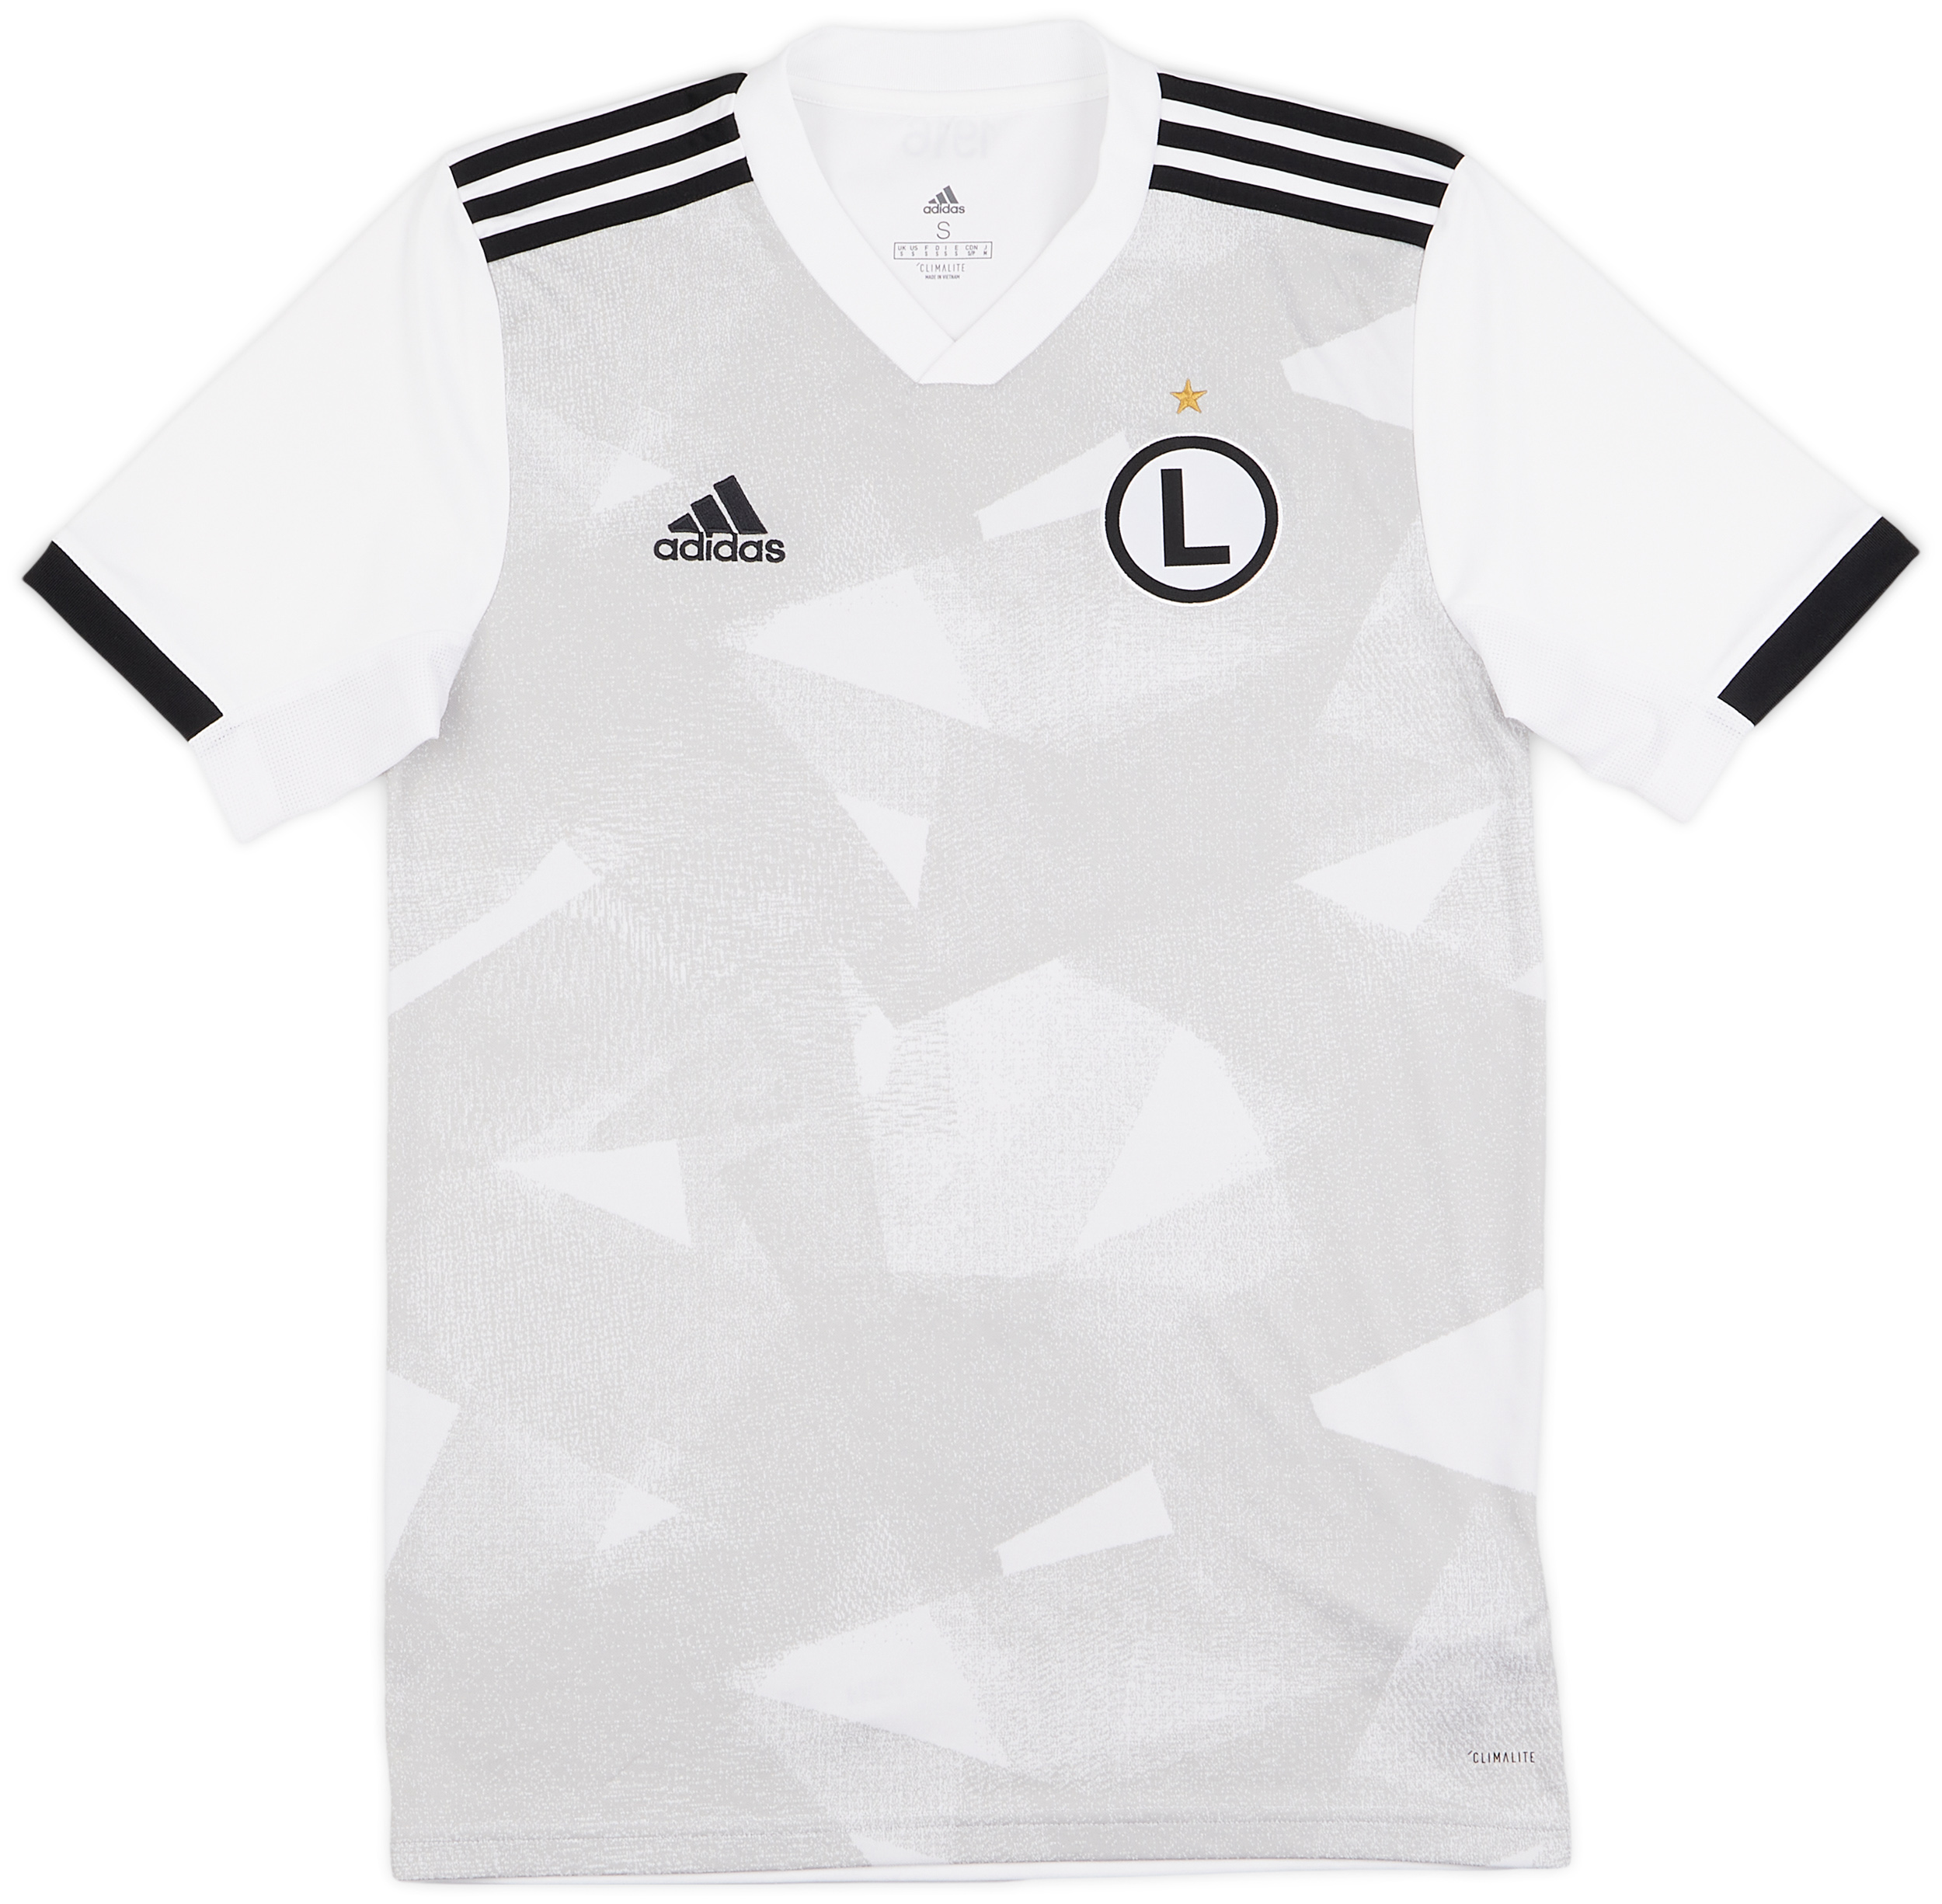 Legia Warsaw   Away shirt (Original)